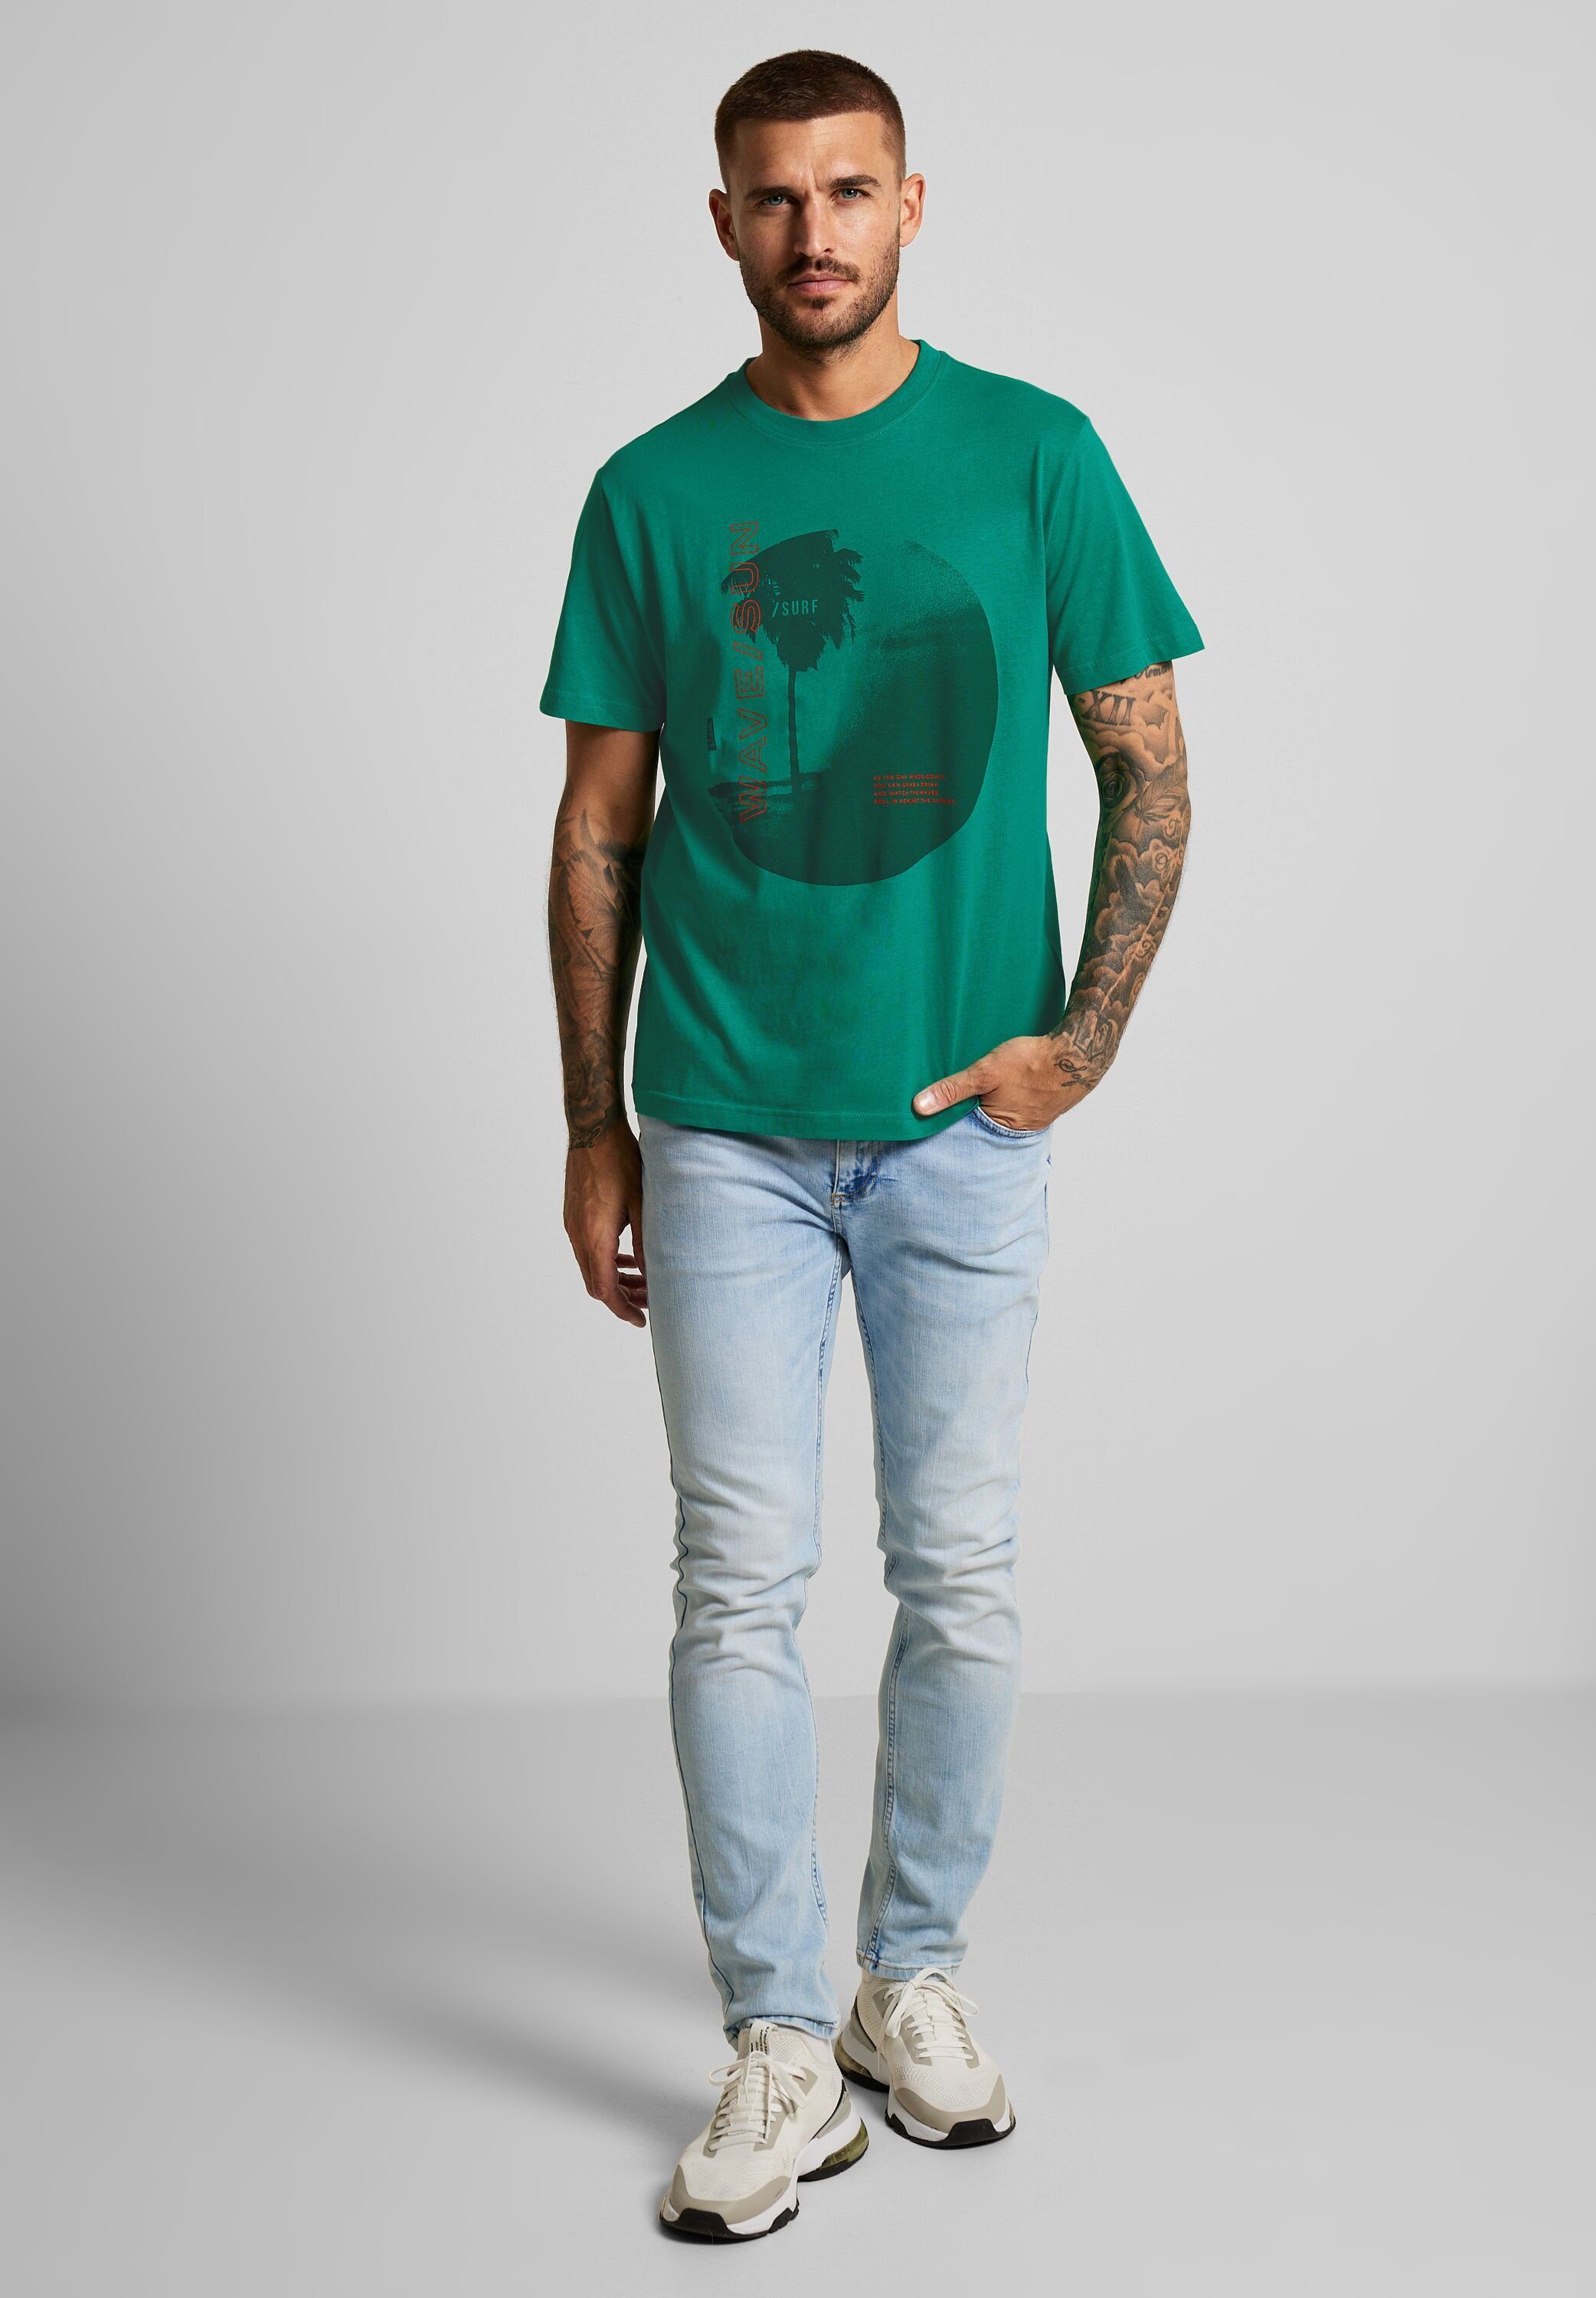 ONE green irish STREET T-Shirt MEN